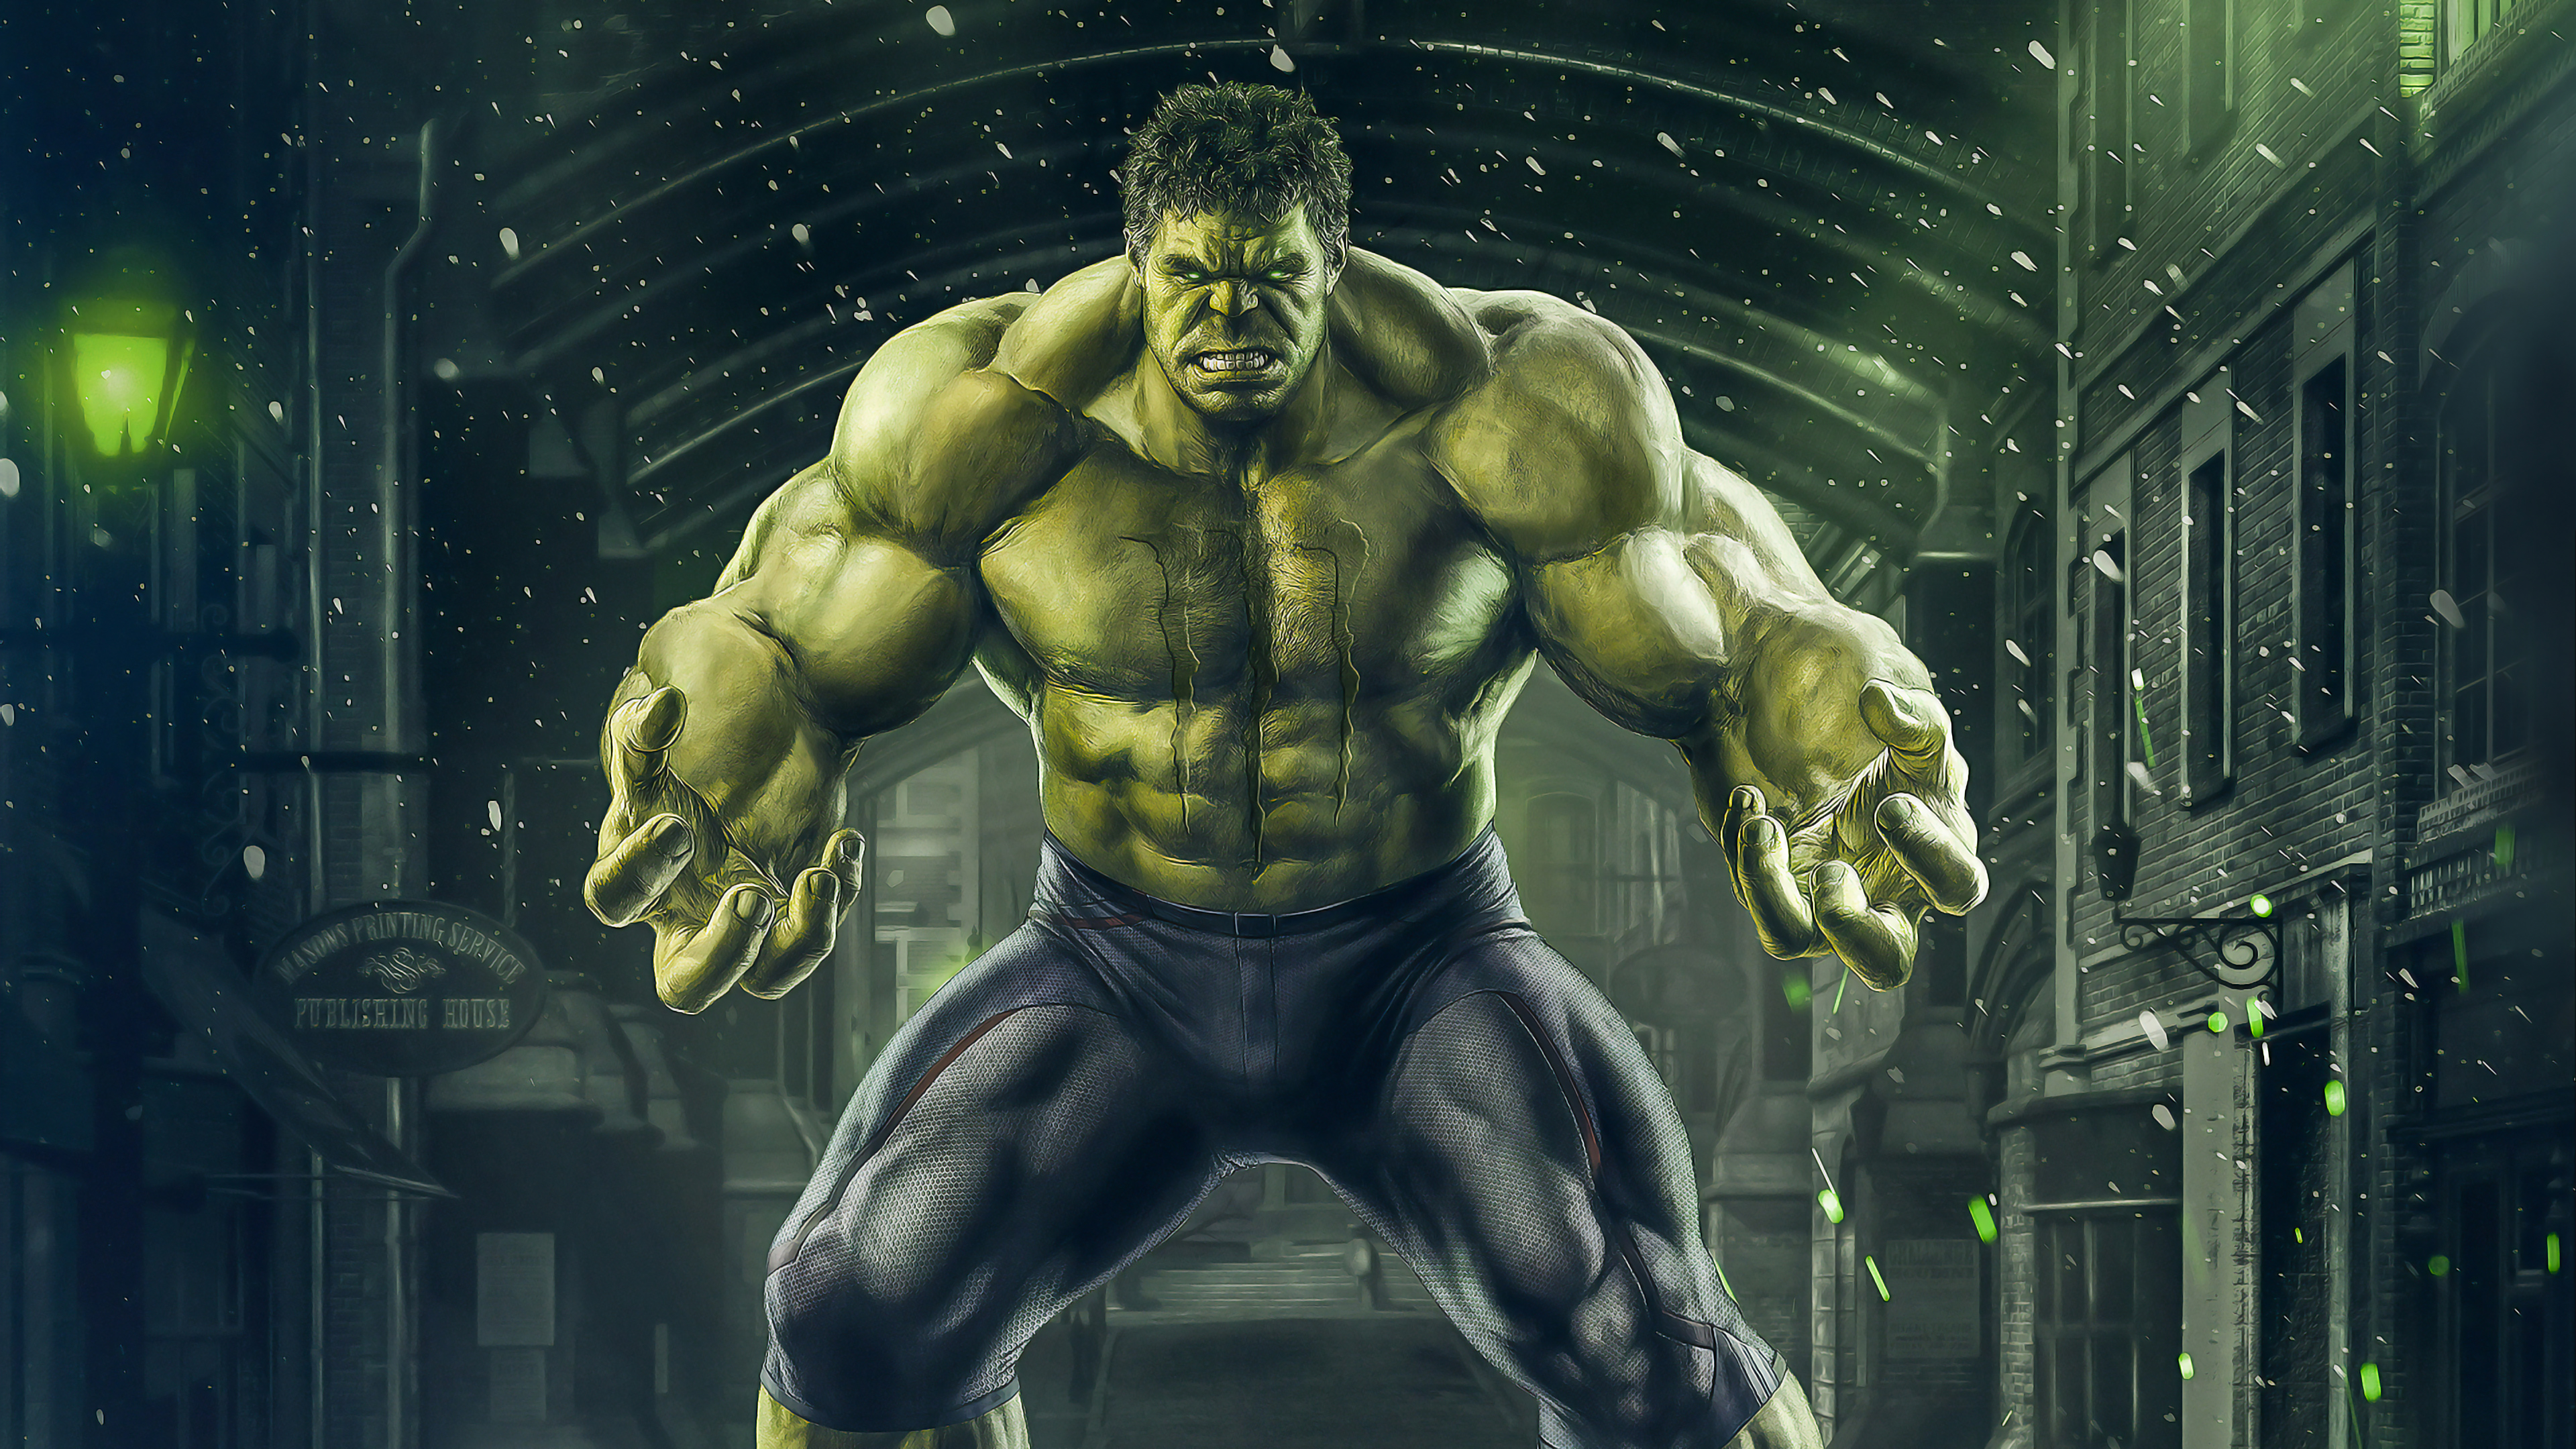 Hulk The Beast 4k, HD Superheroes, 4k Wallpapers, Images, Backgrounds